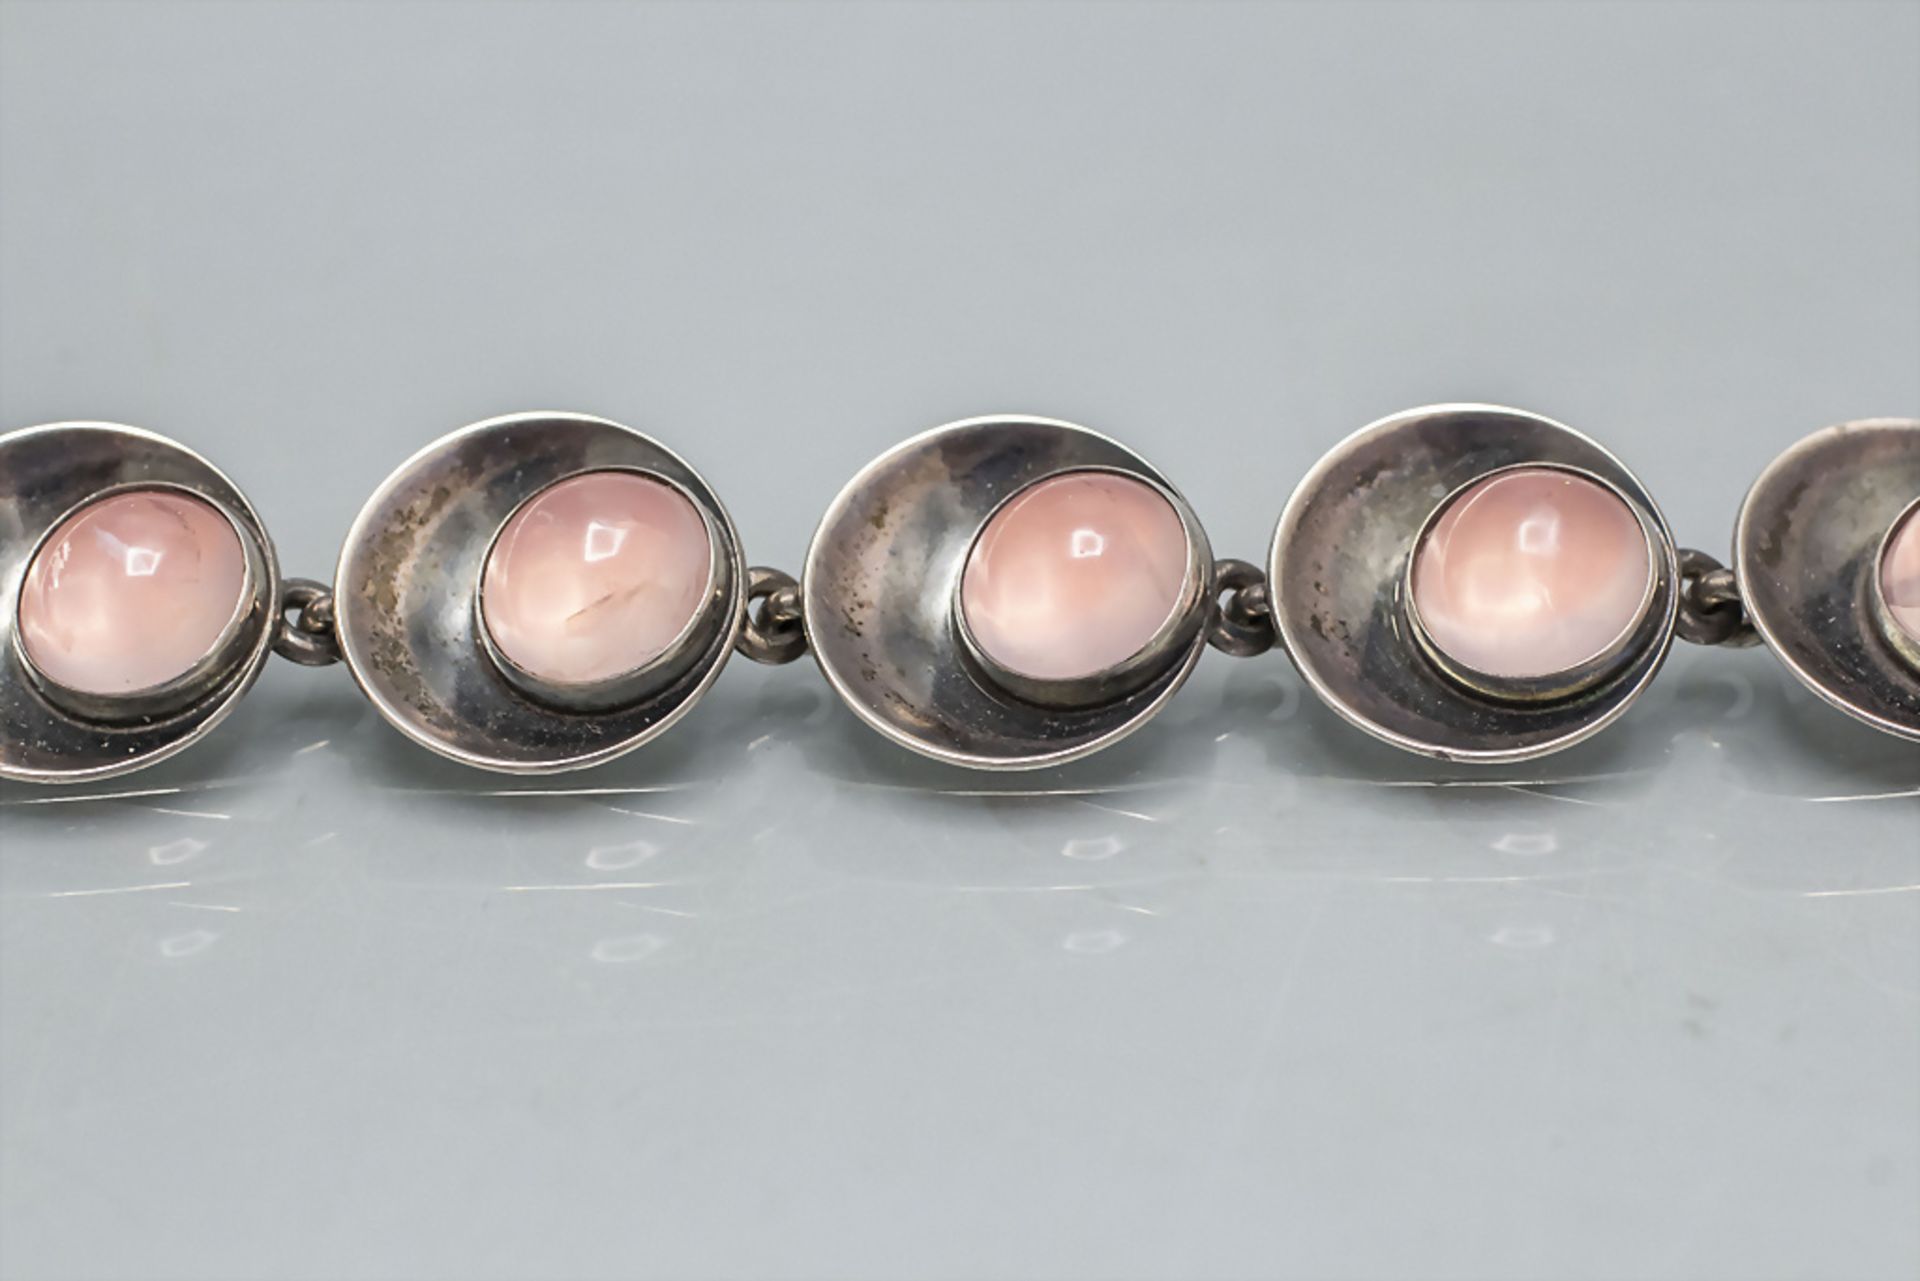 Silber Armband mit Rosenquarz / A silver bracelet with rose quartz, Nils Erik From, Dänemark, ... - Image 3 of 5